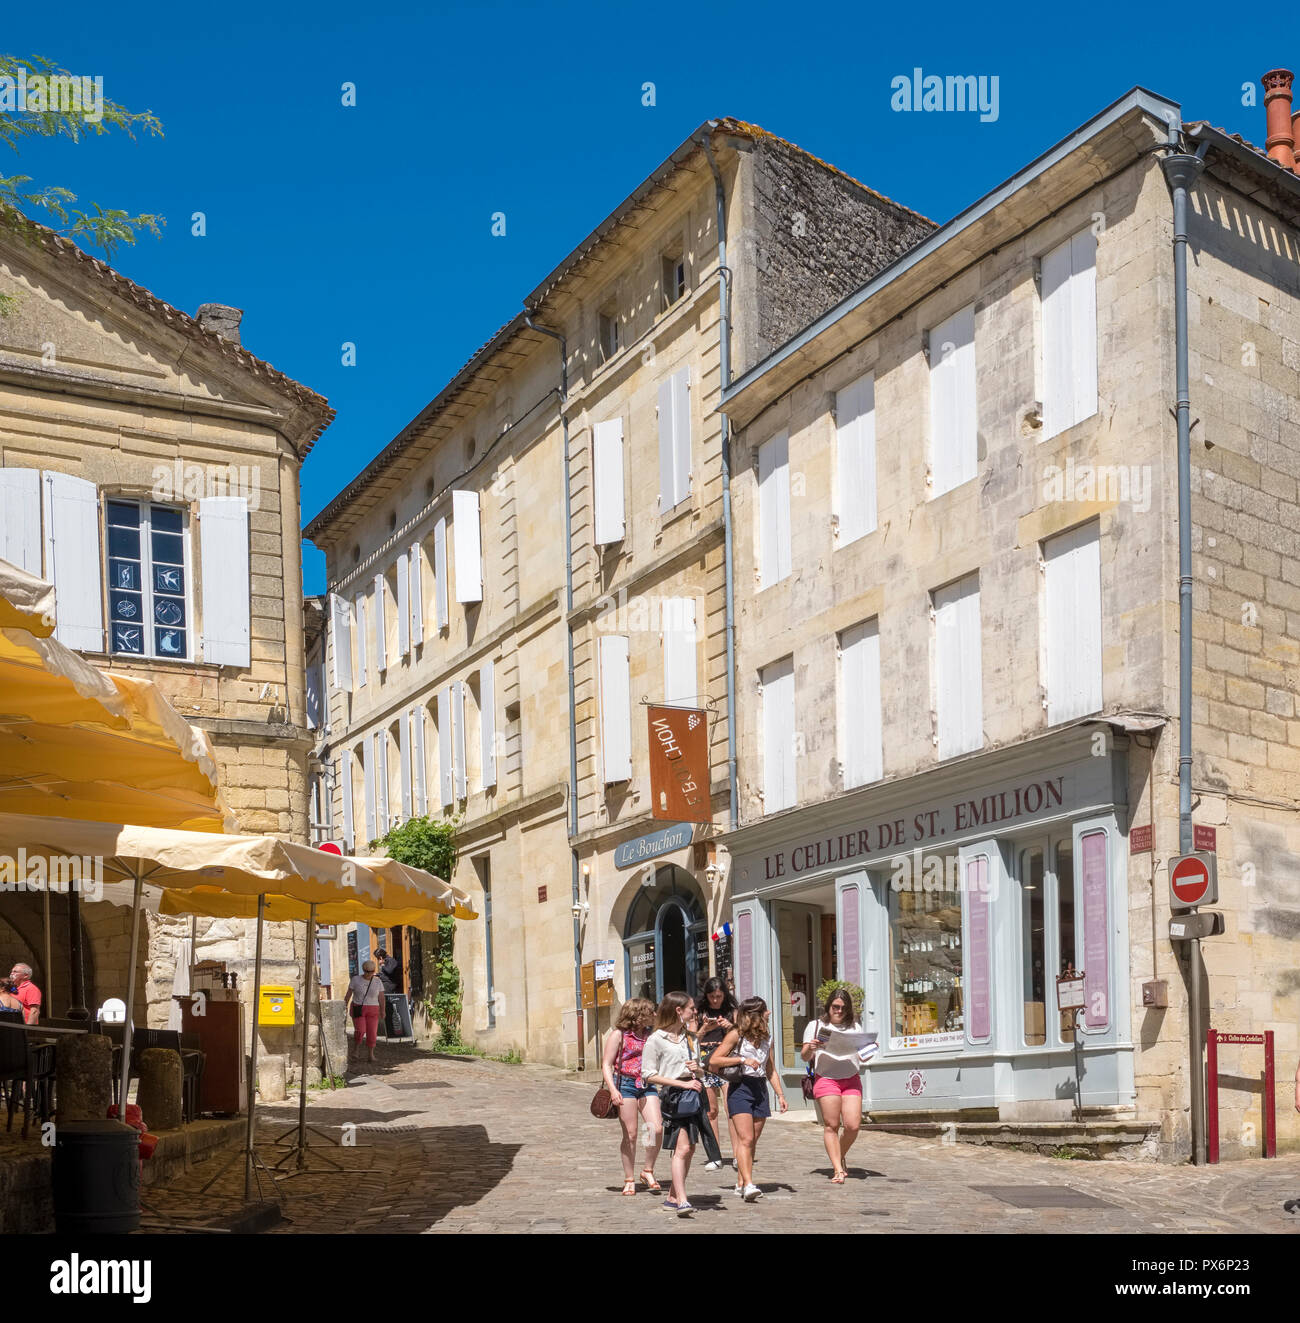 Street scene in the village of Saint Emilion, France, Europe Stock Photo